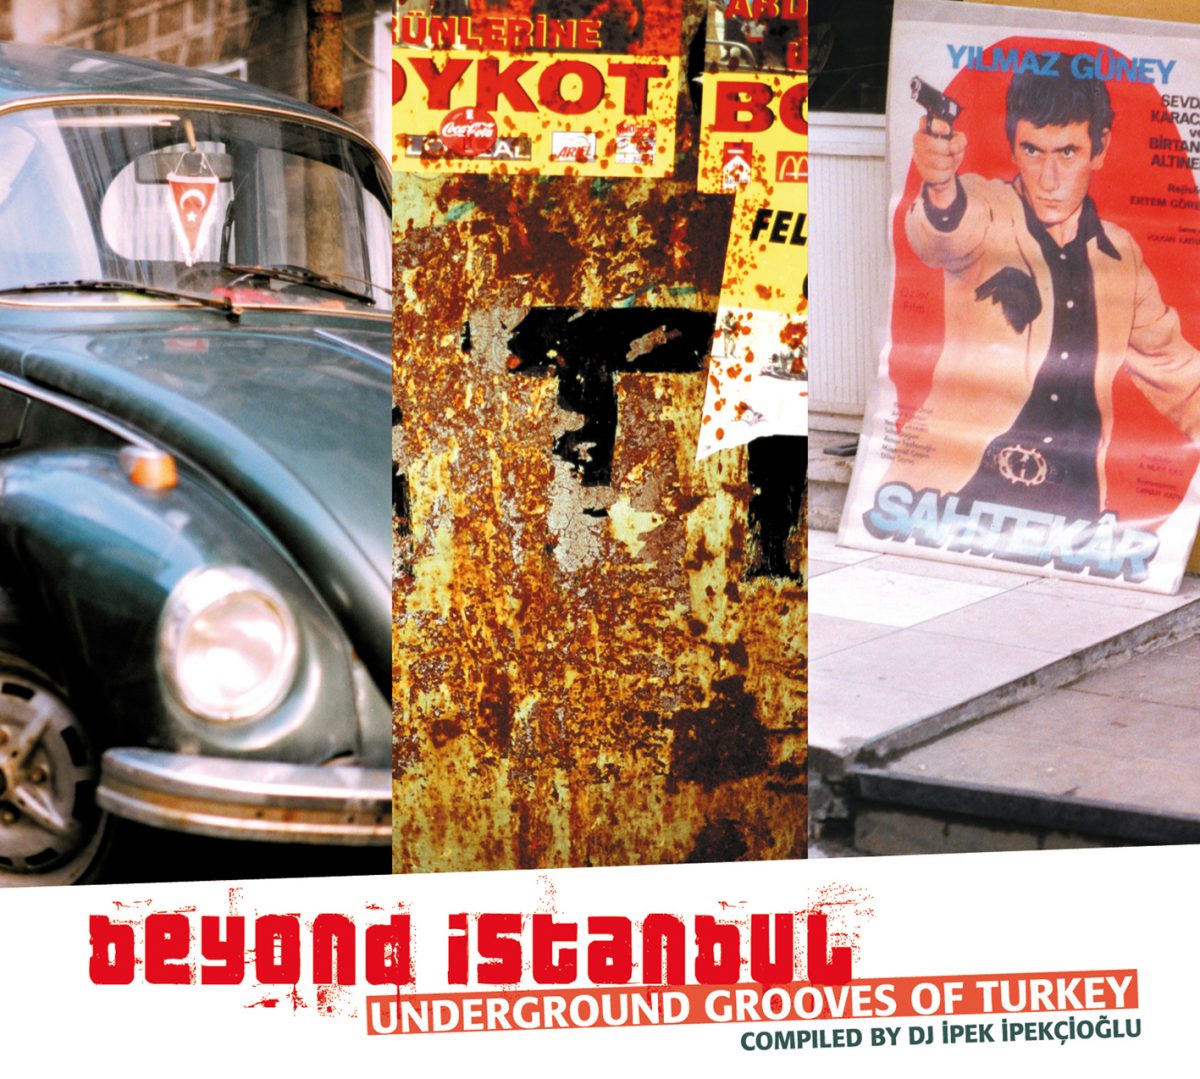 Beyond Istanbul - Underground Grooves of Turkey 1